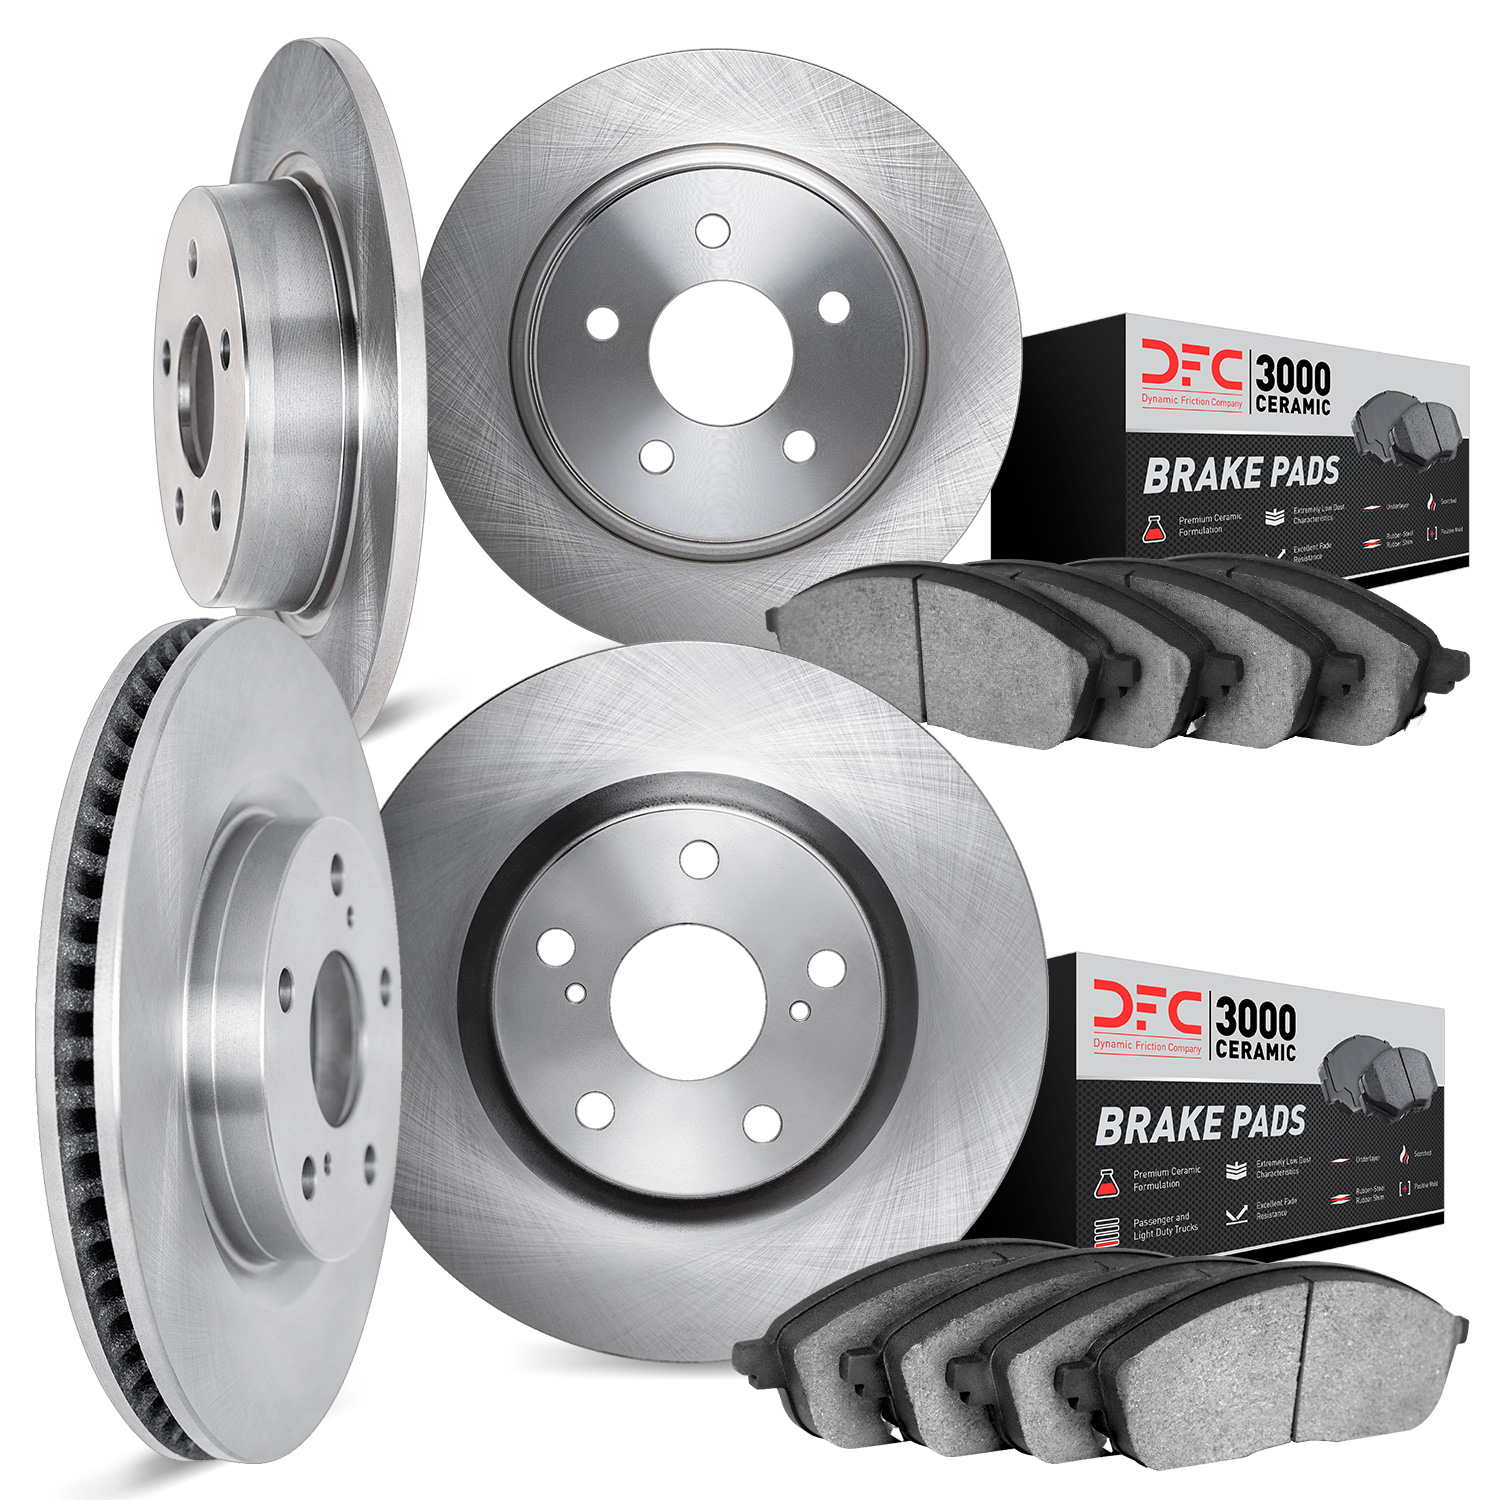 6304-59039 Brake Rotors with 3000-Series Ceramic Brake Pads Kit, 2013-2015 Acura/Honda, Position: Front and Rear